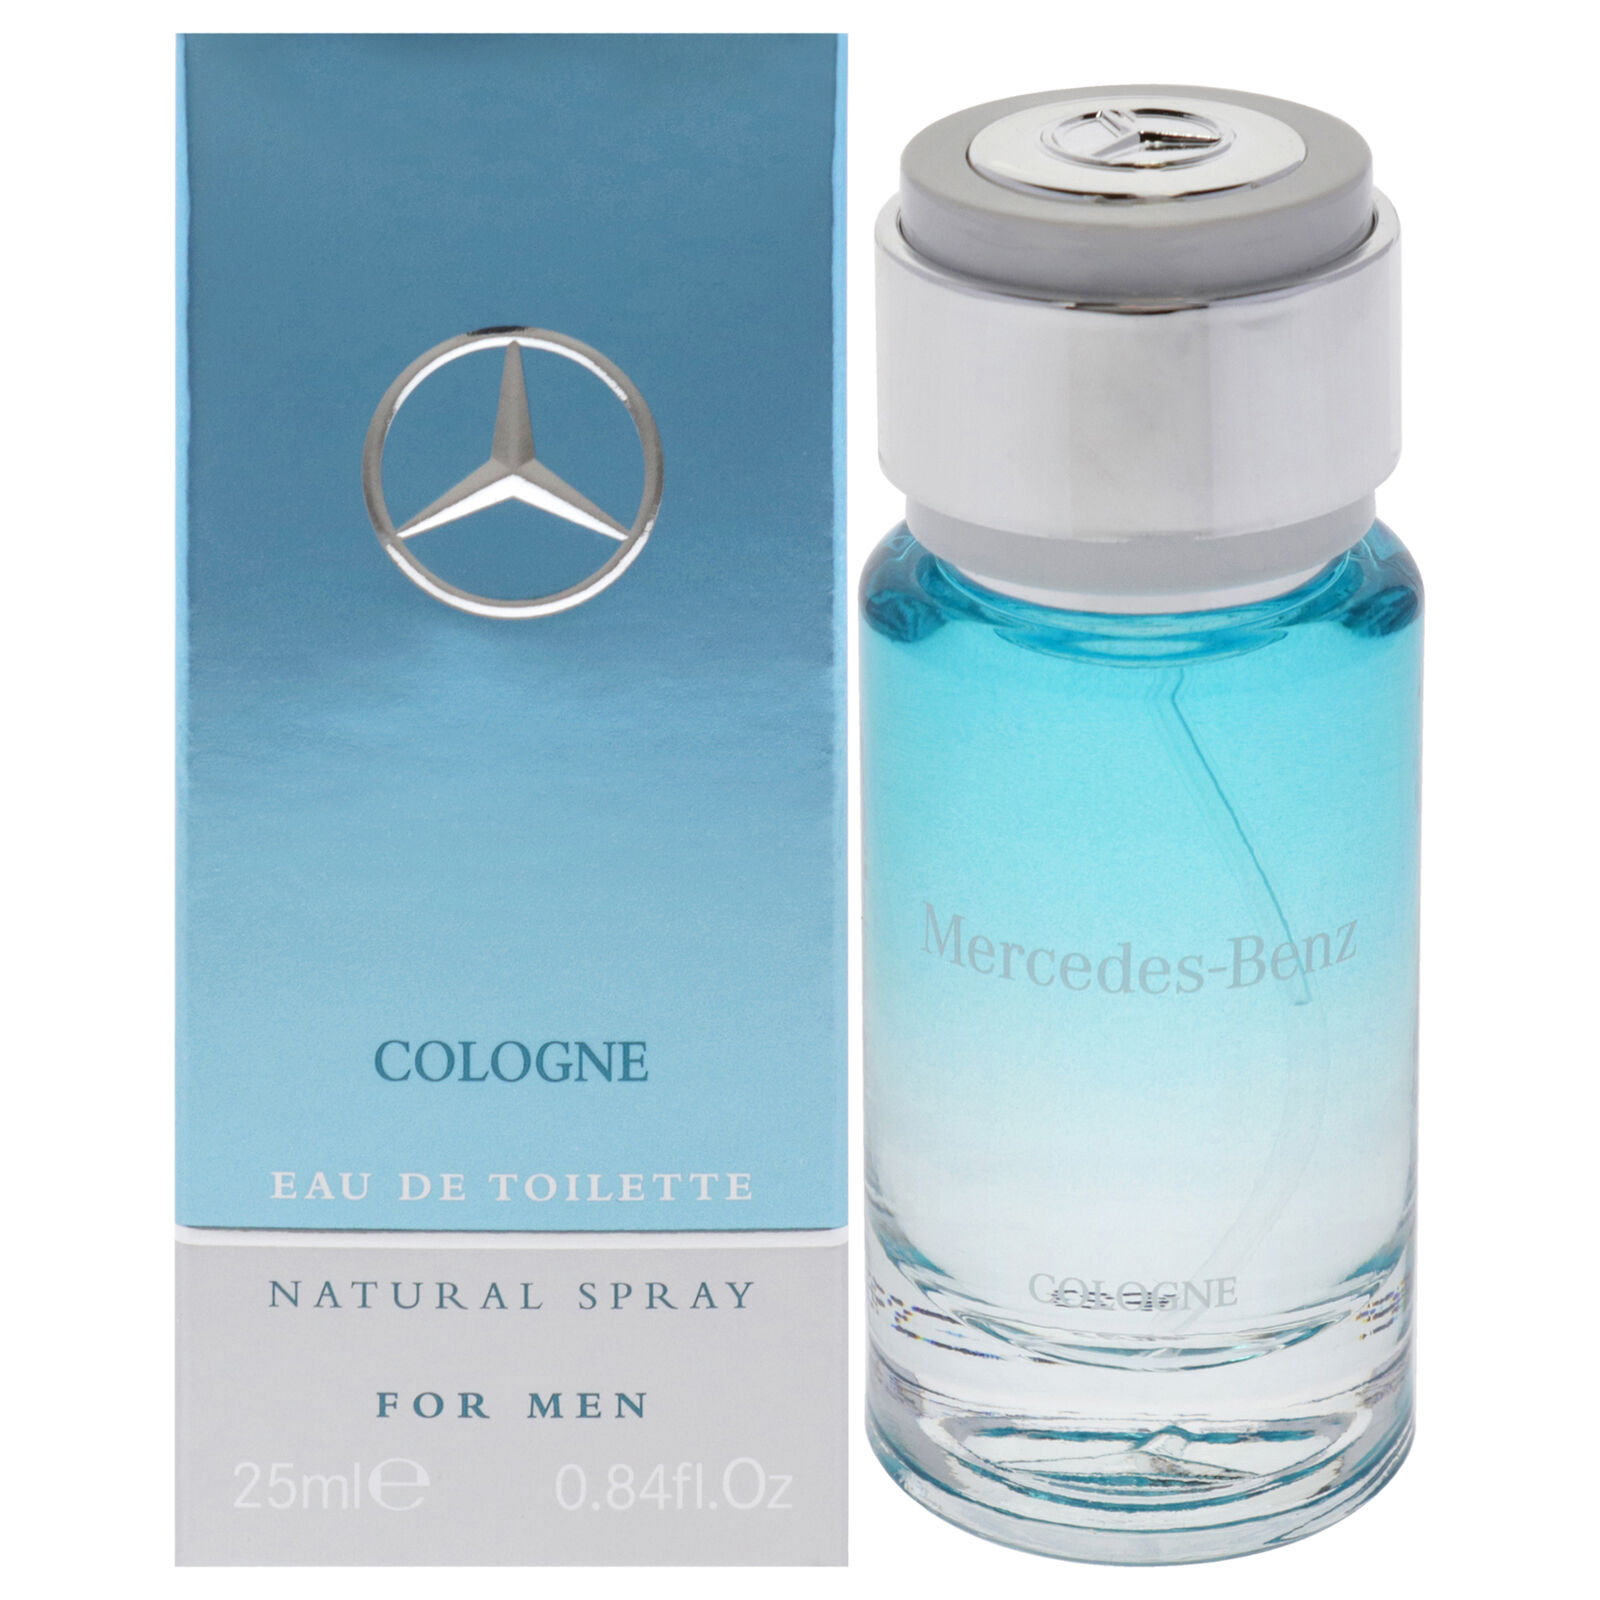 Mercedes-Benz Cologne by Mercedes-Benz for Men - 0.84 oz EDT Spray